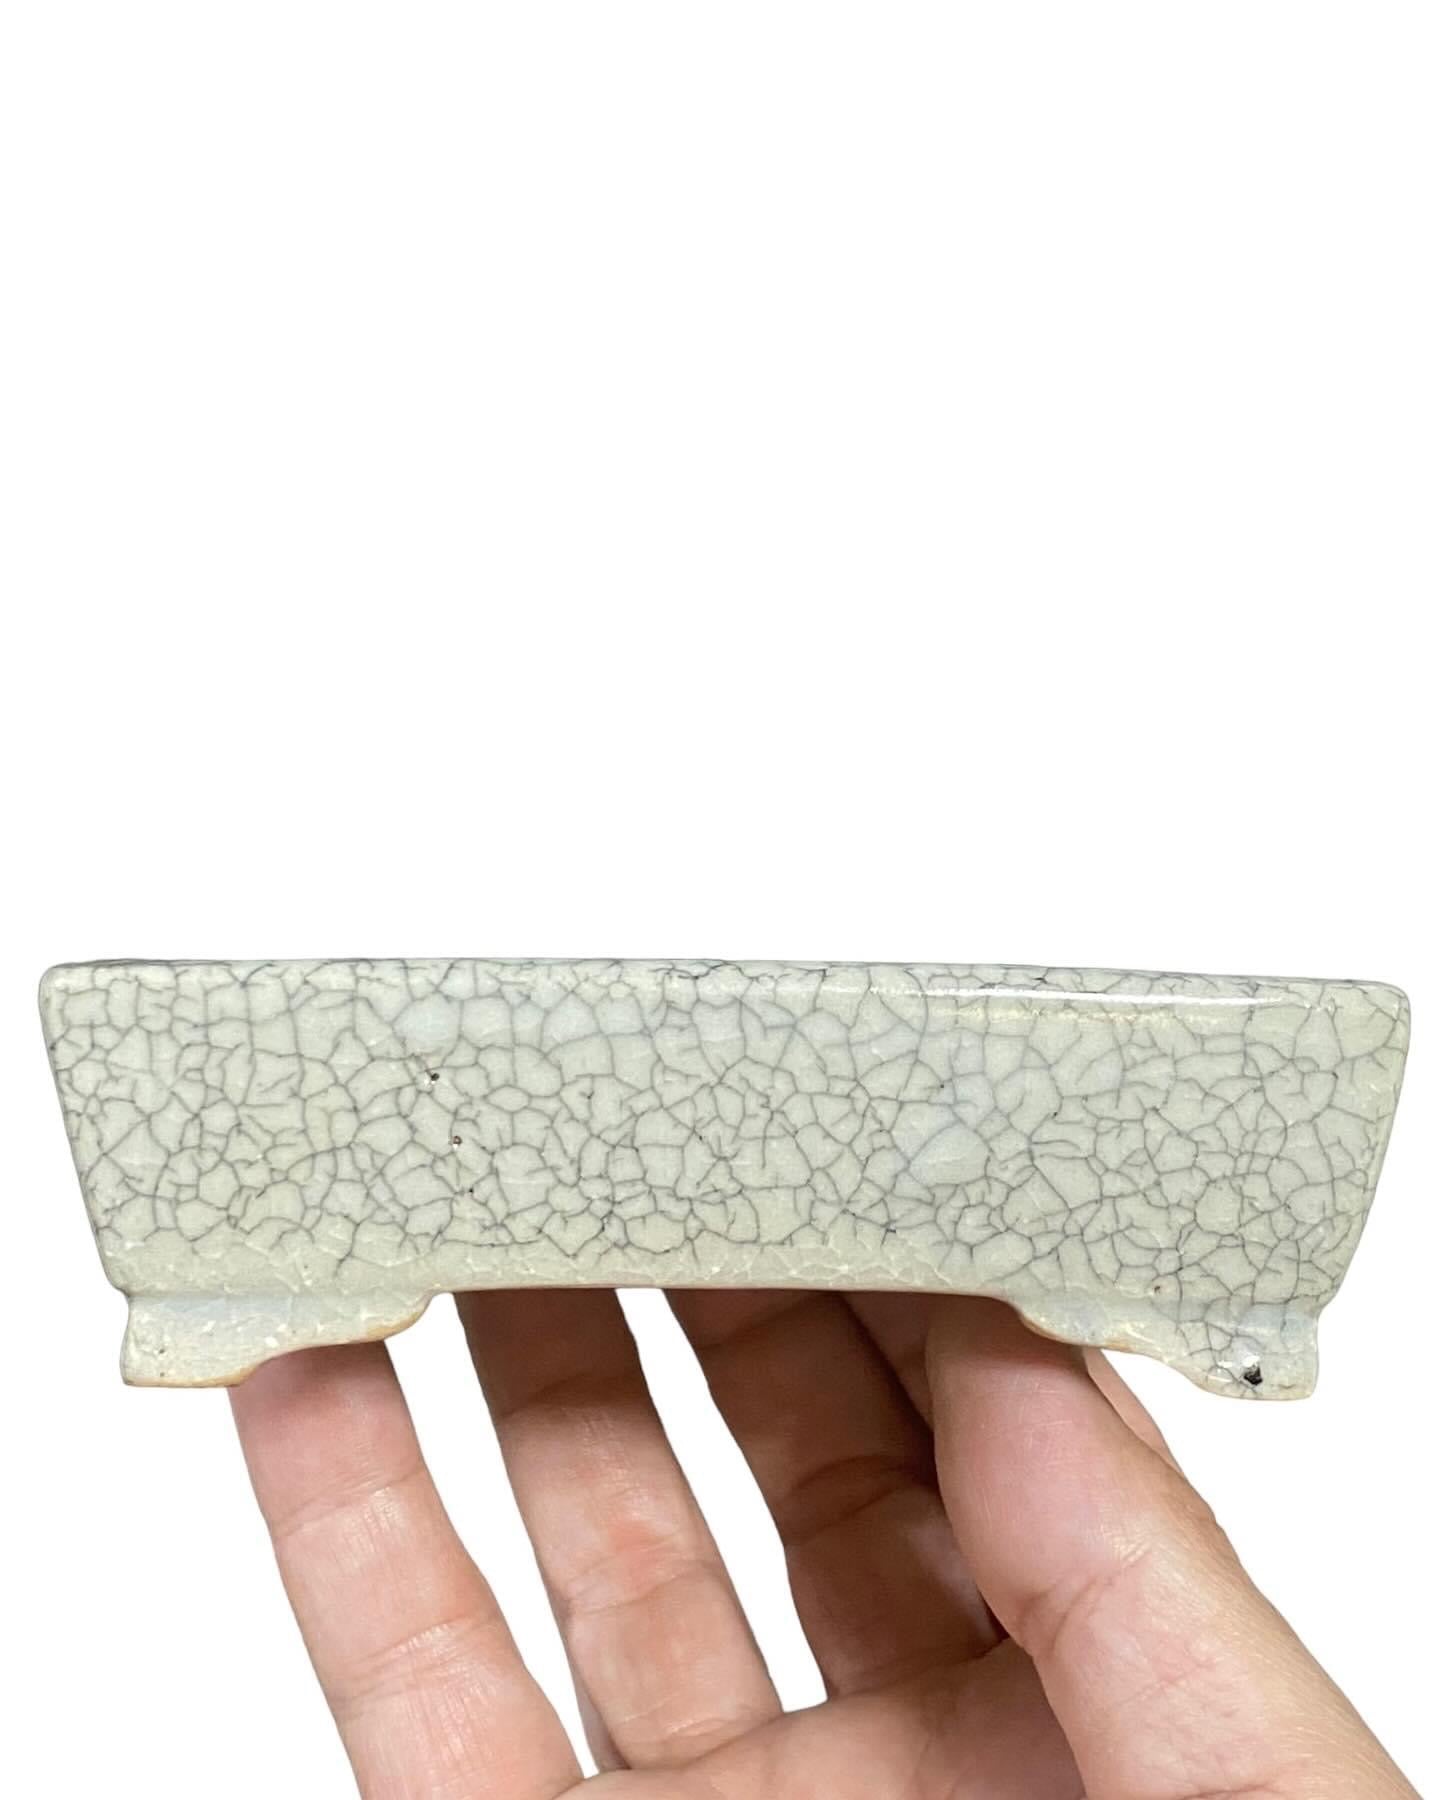 Shibakatsu - White Crackle Glazed Rectangle Style Bonsai Pot (4-15/16” wide)